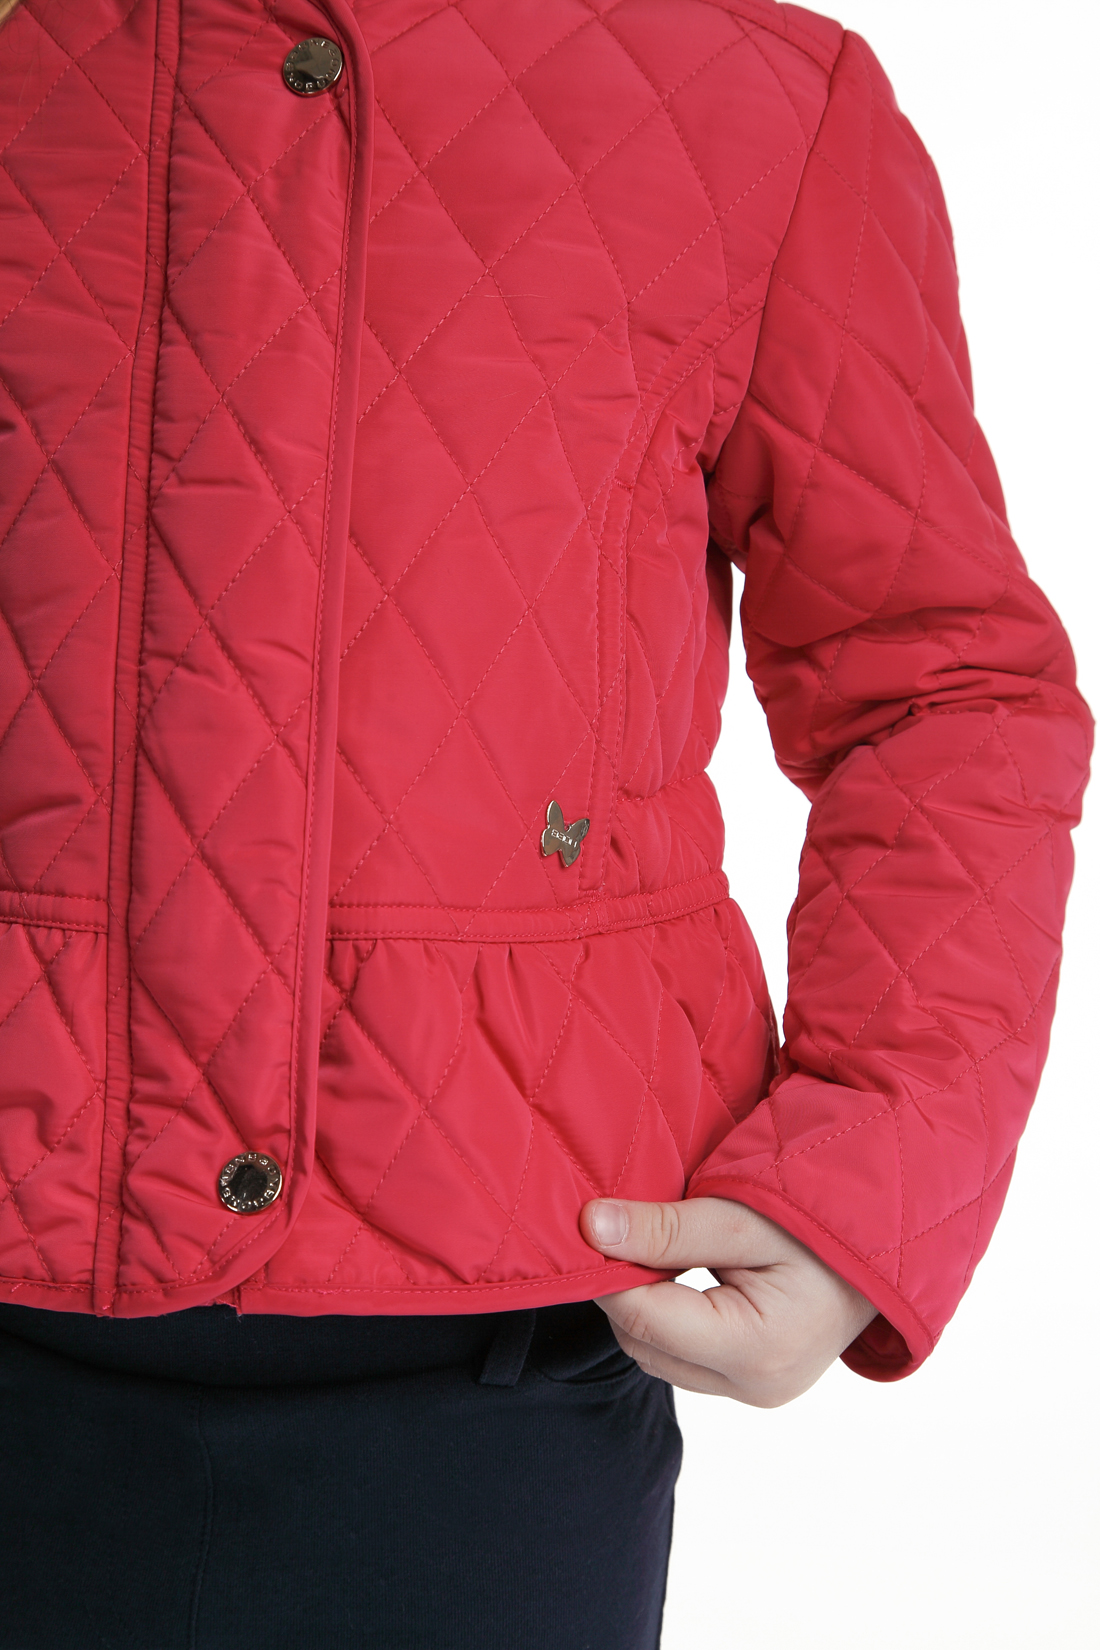 Куртка для девочки (арт. baon BK038004), размер 122-128, цвет розовый Куртка для девочки (арт. baon BK038004) - фото 7